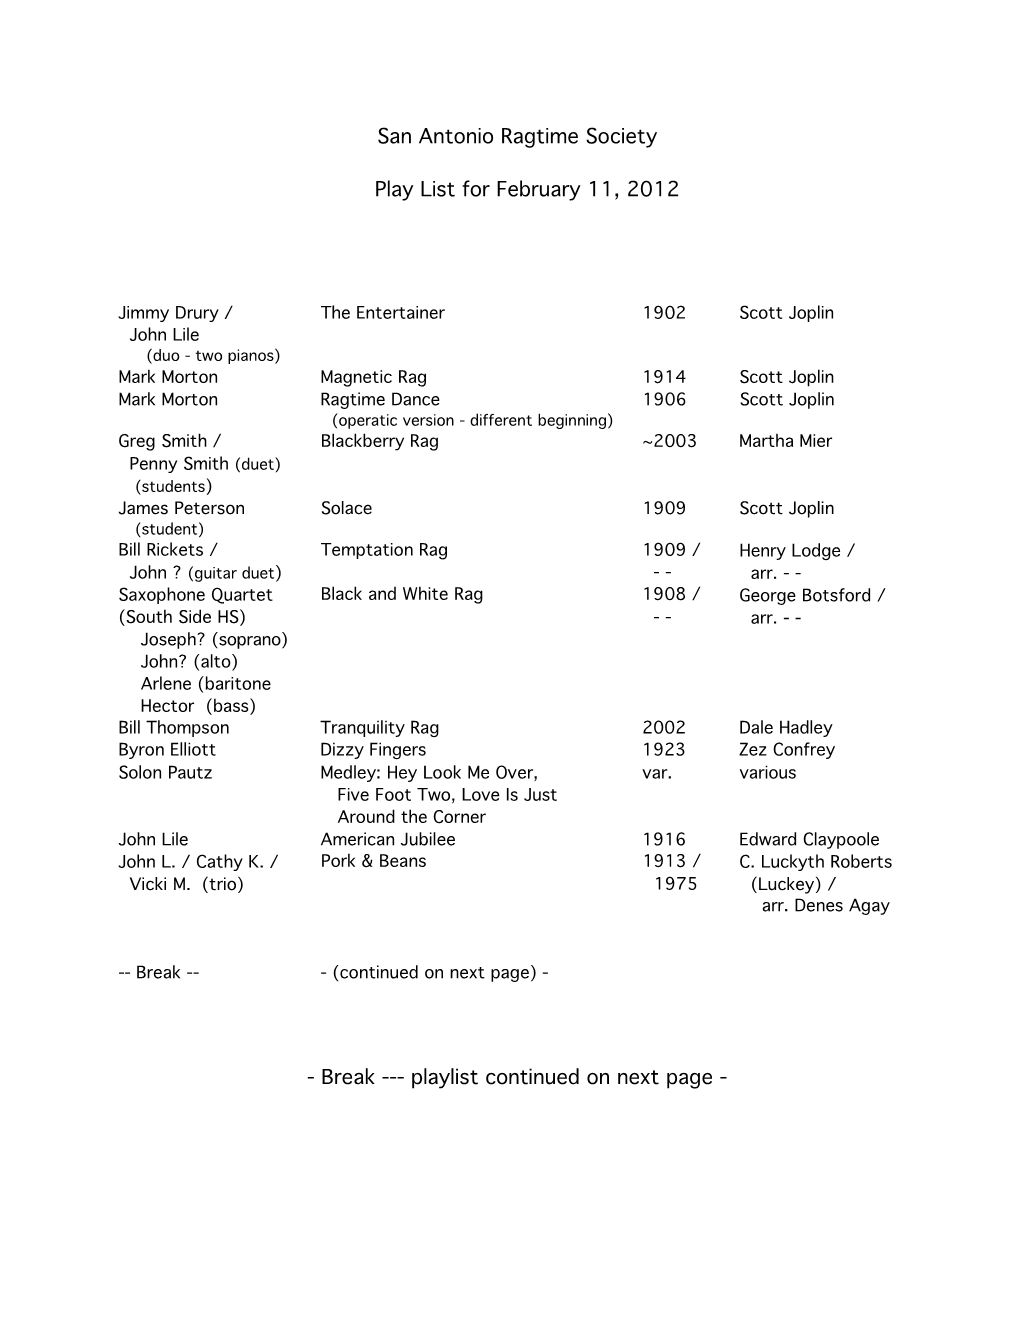 San Antonio Ragtime Society Play List for February 11, 2012